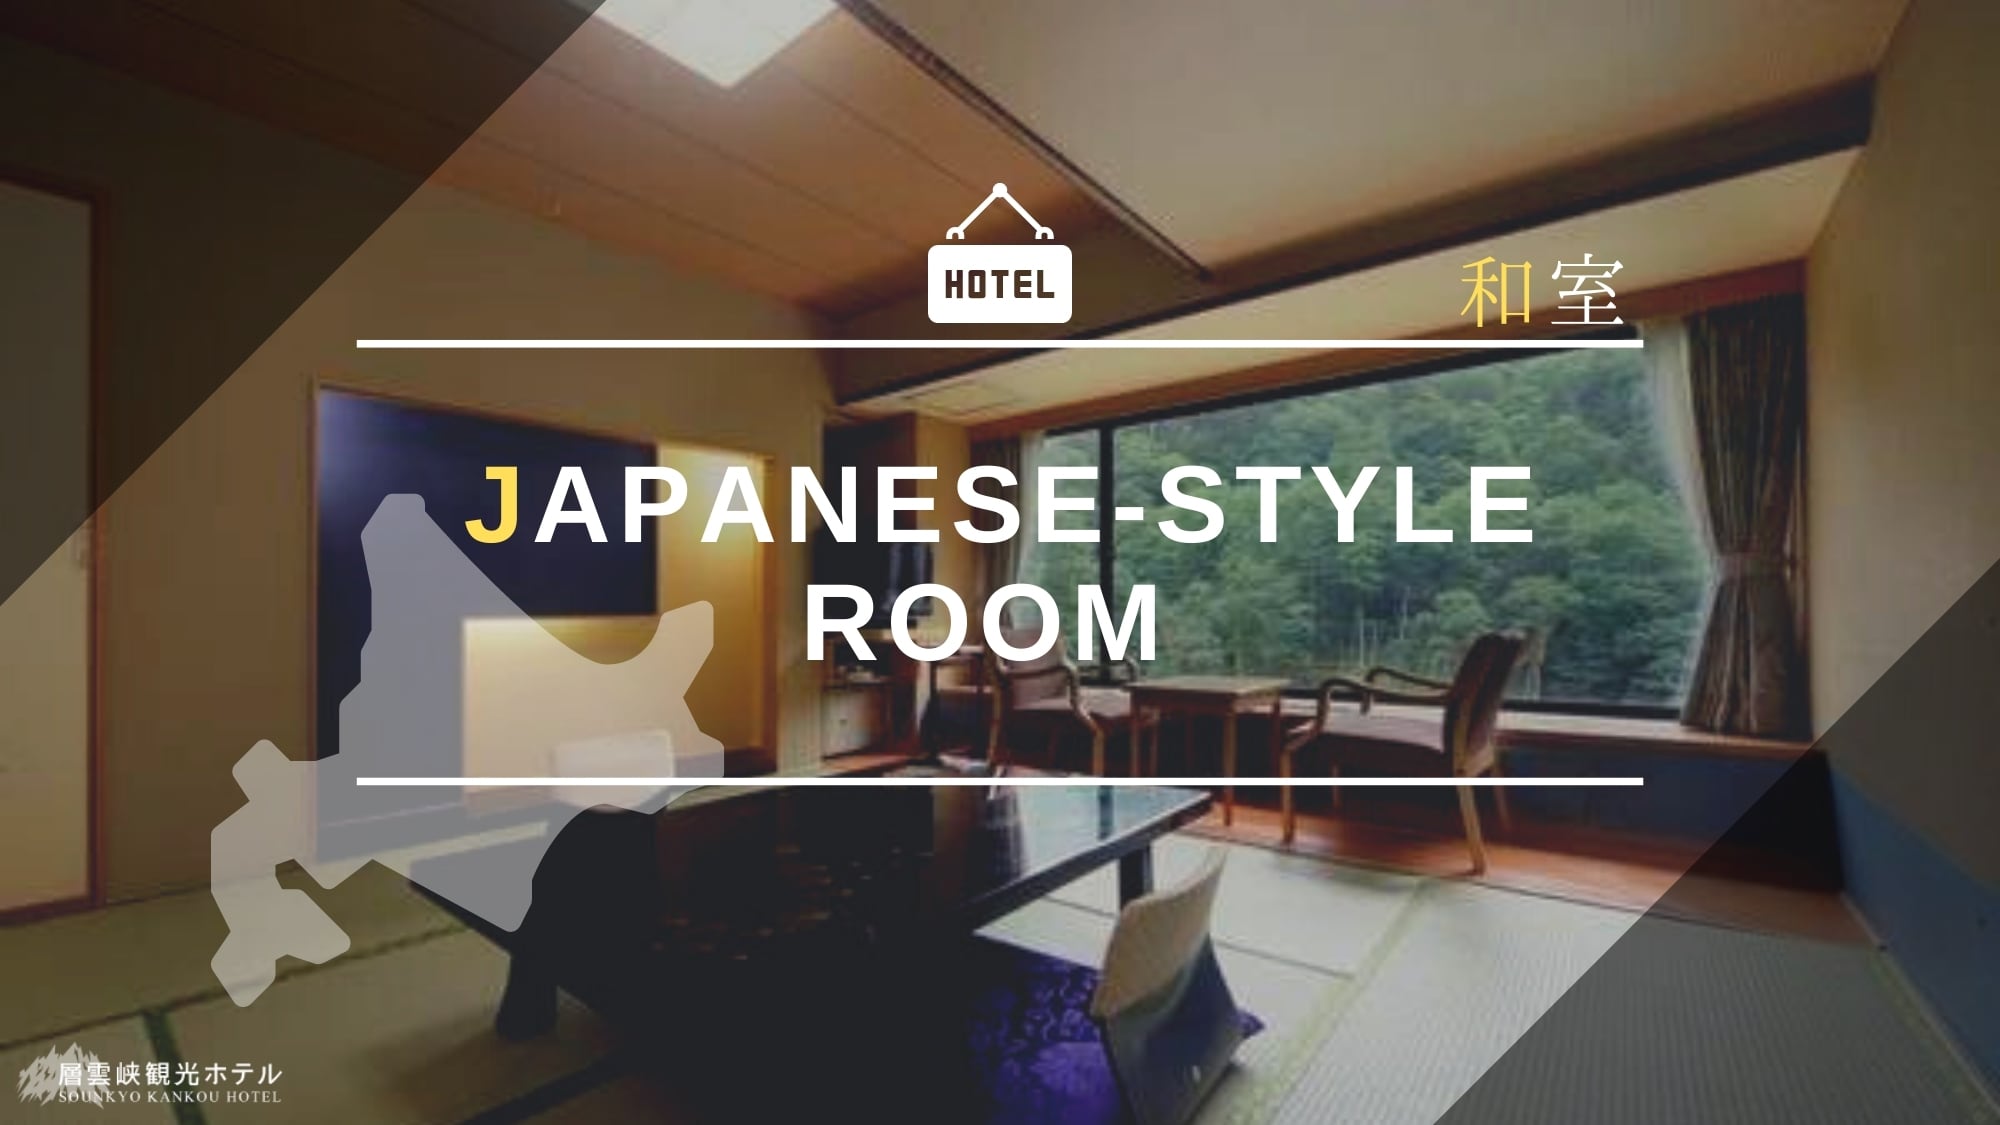 Main building "Japanese style room 8 tatami mats"